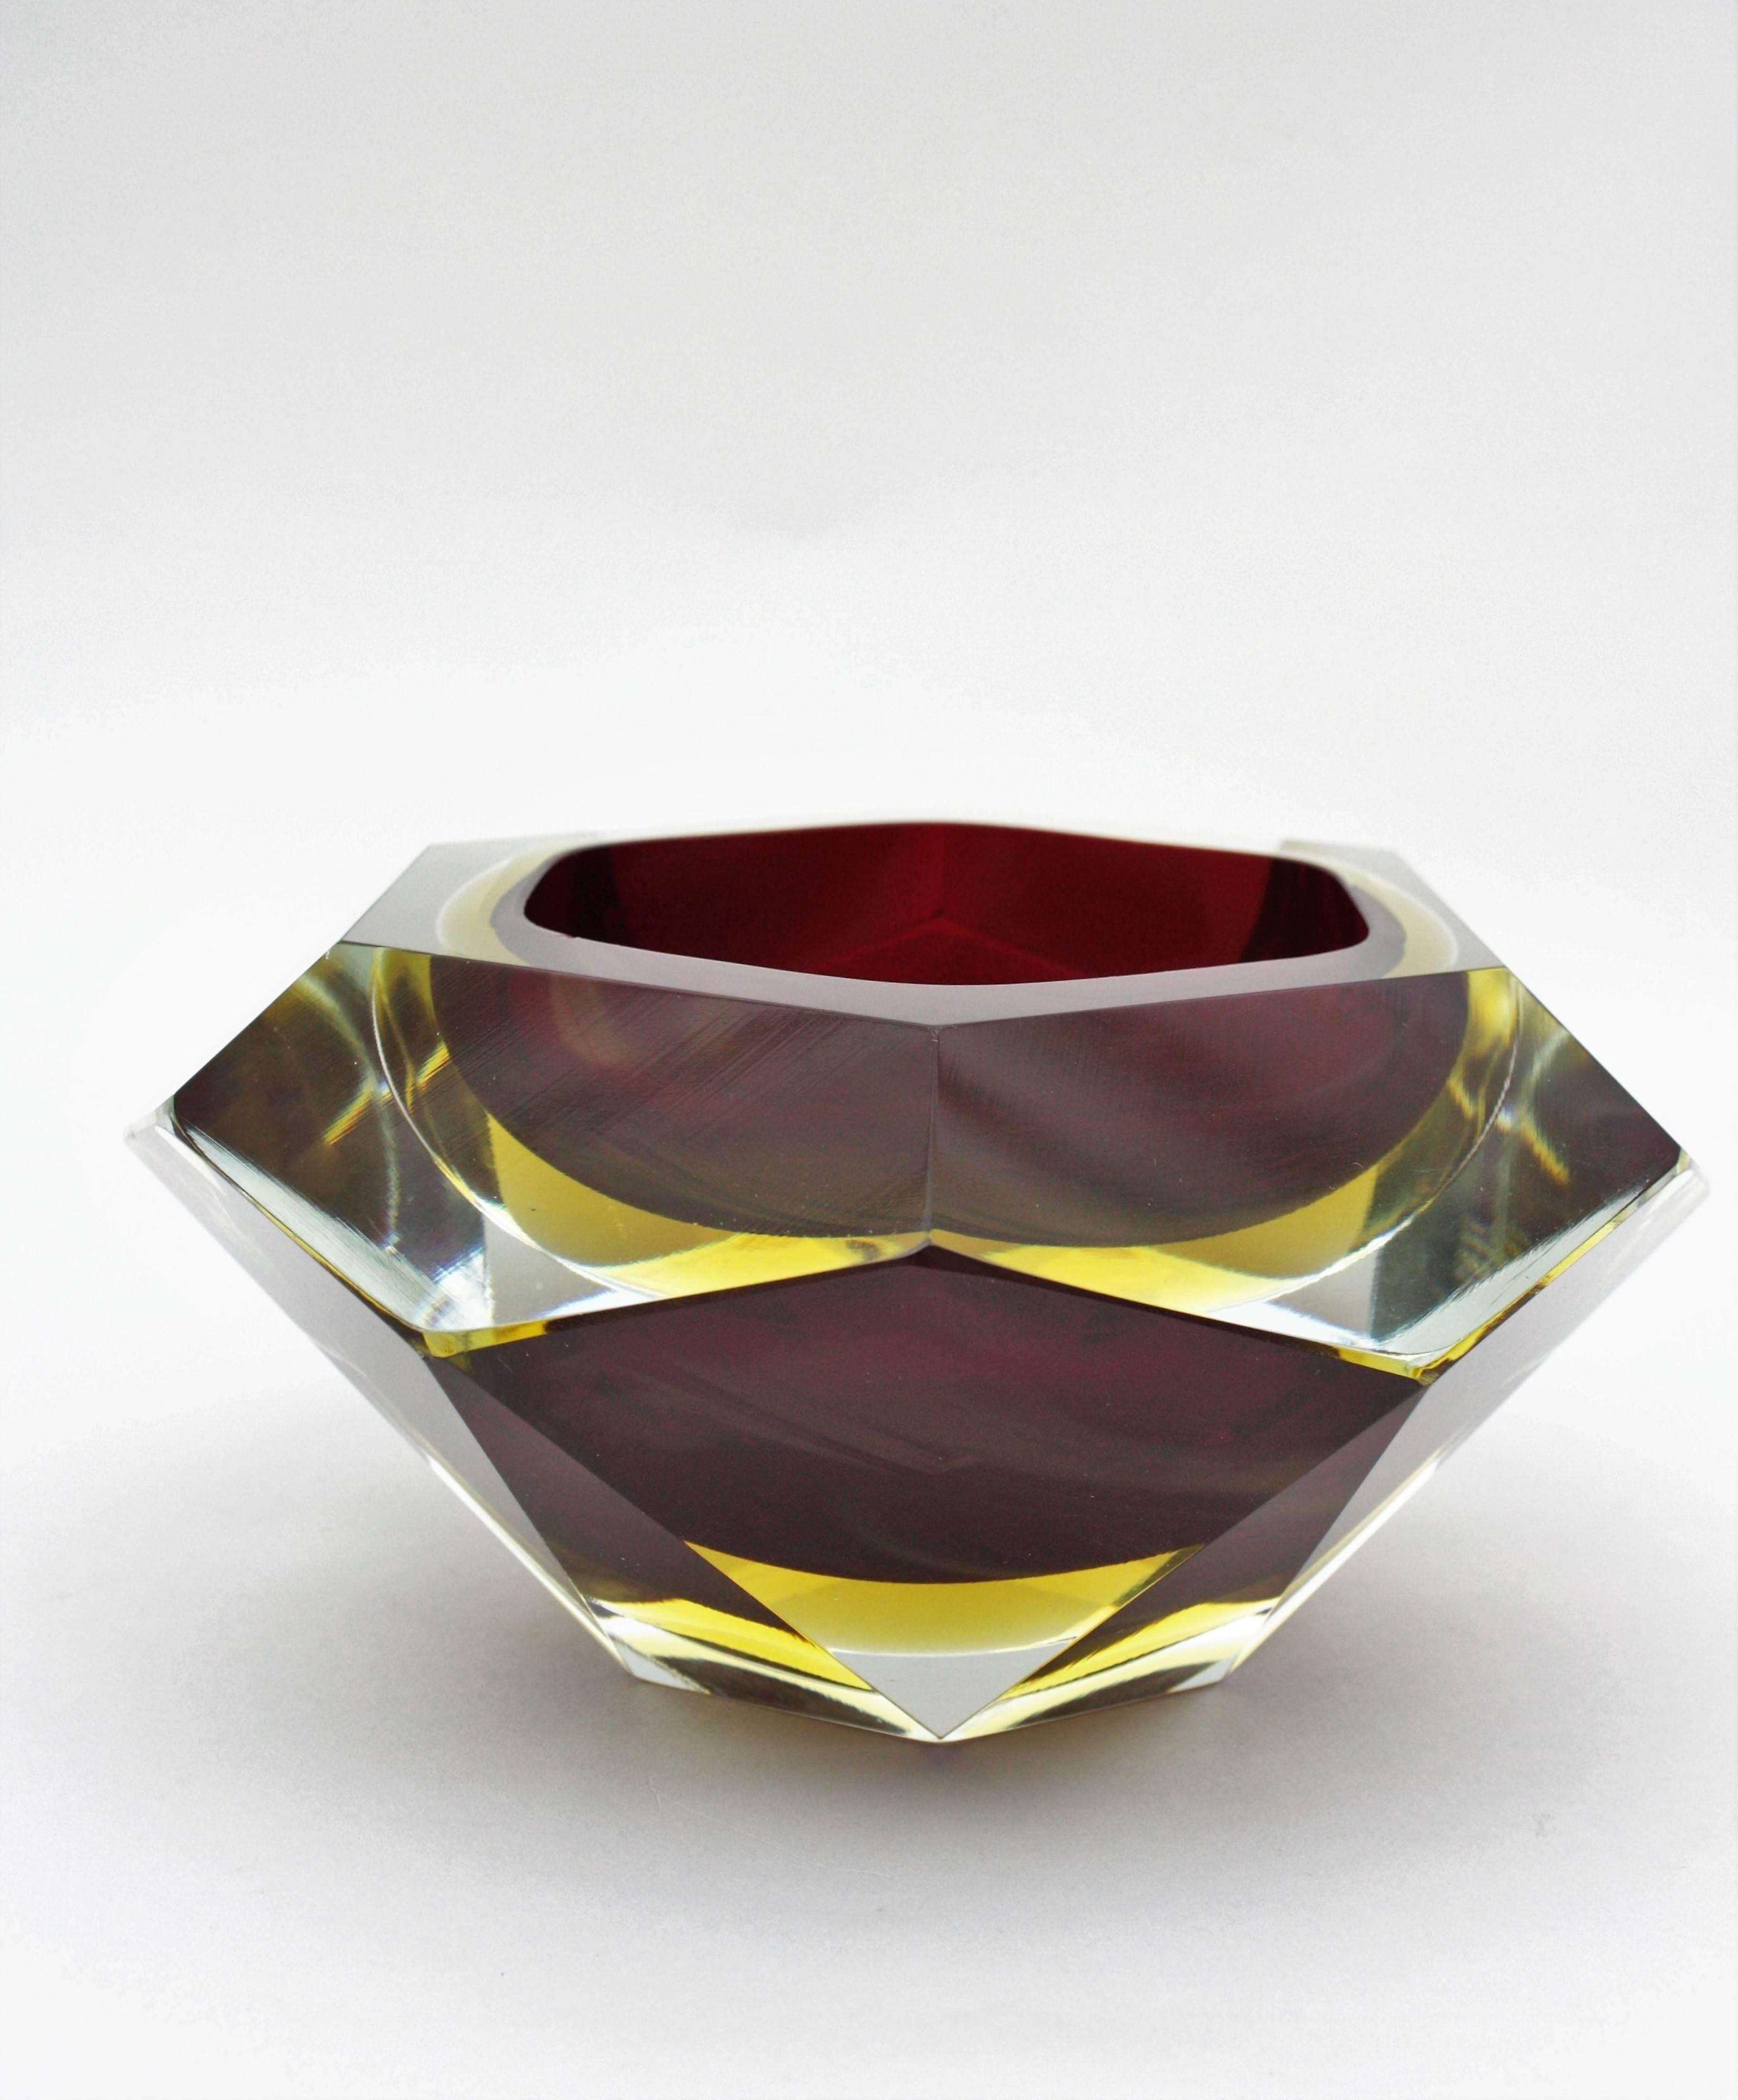 Italian Giant Flavio Poli Ruby and Yellow Diamond Shaped Faceted Murano Glass Bowl